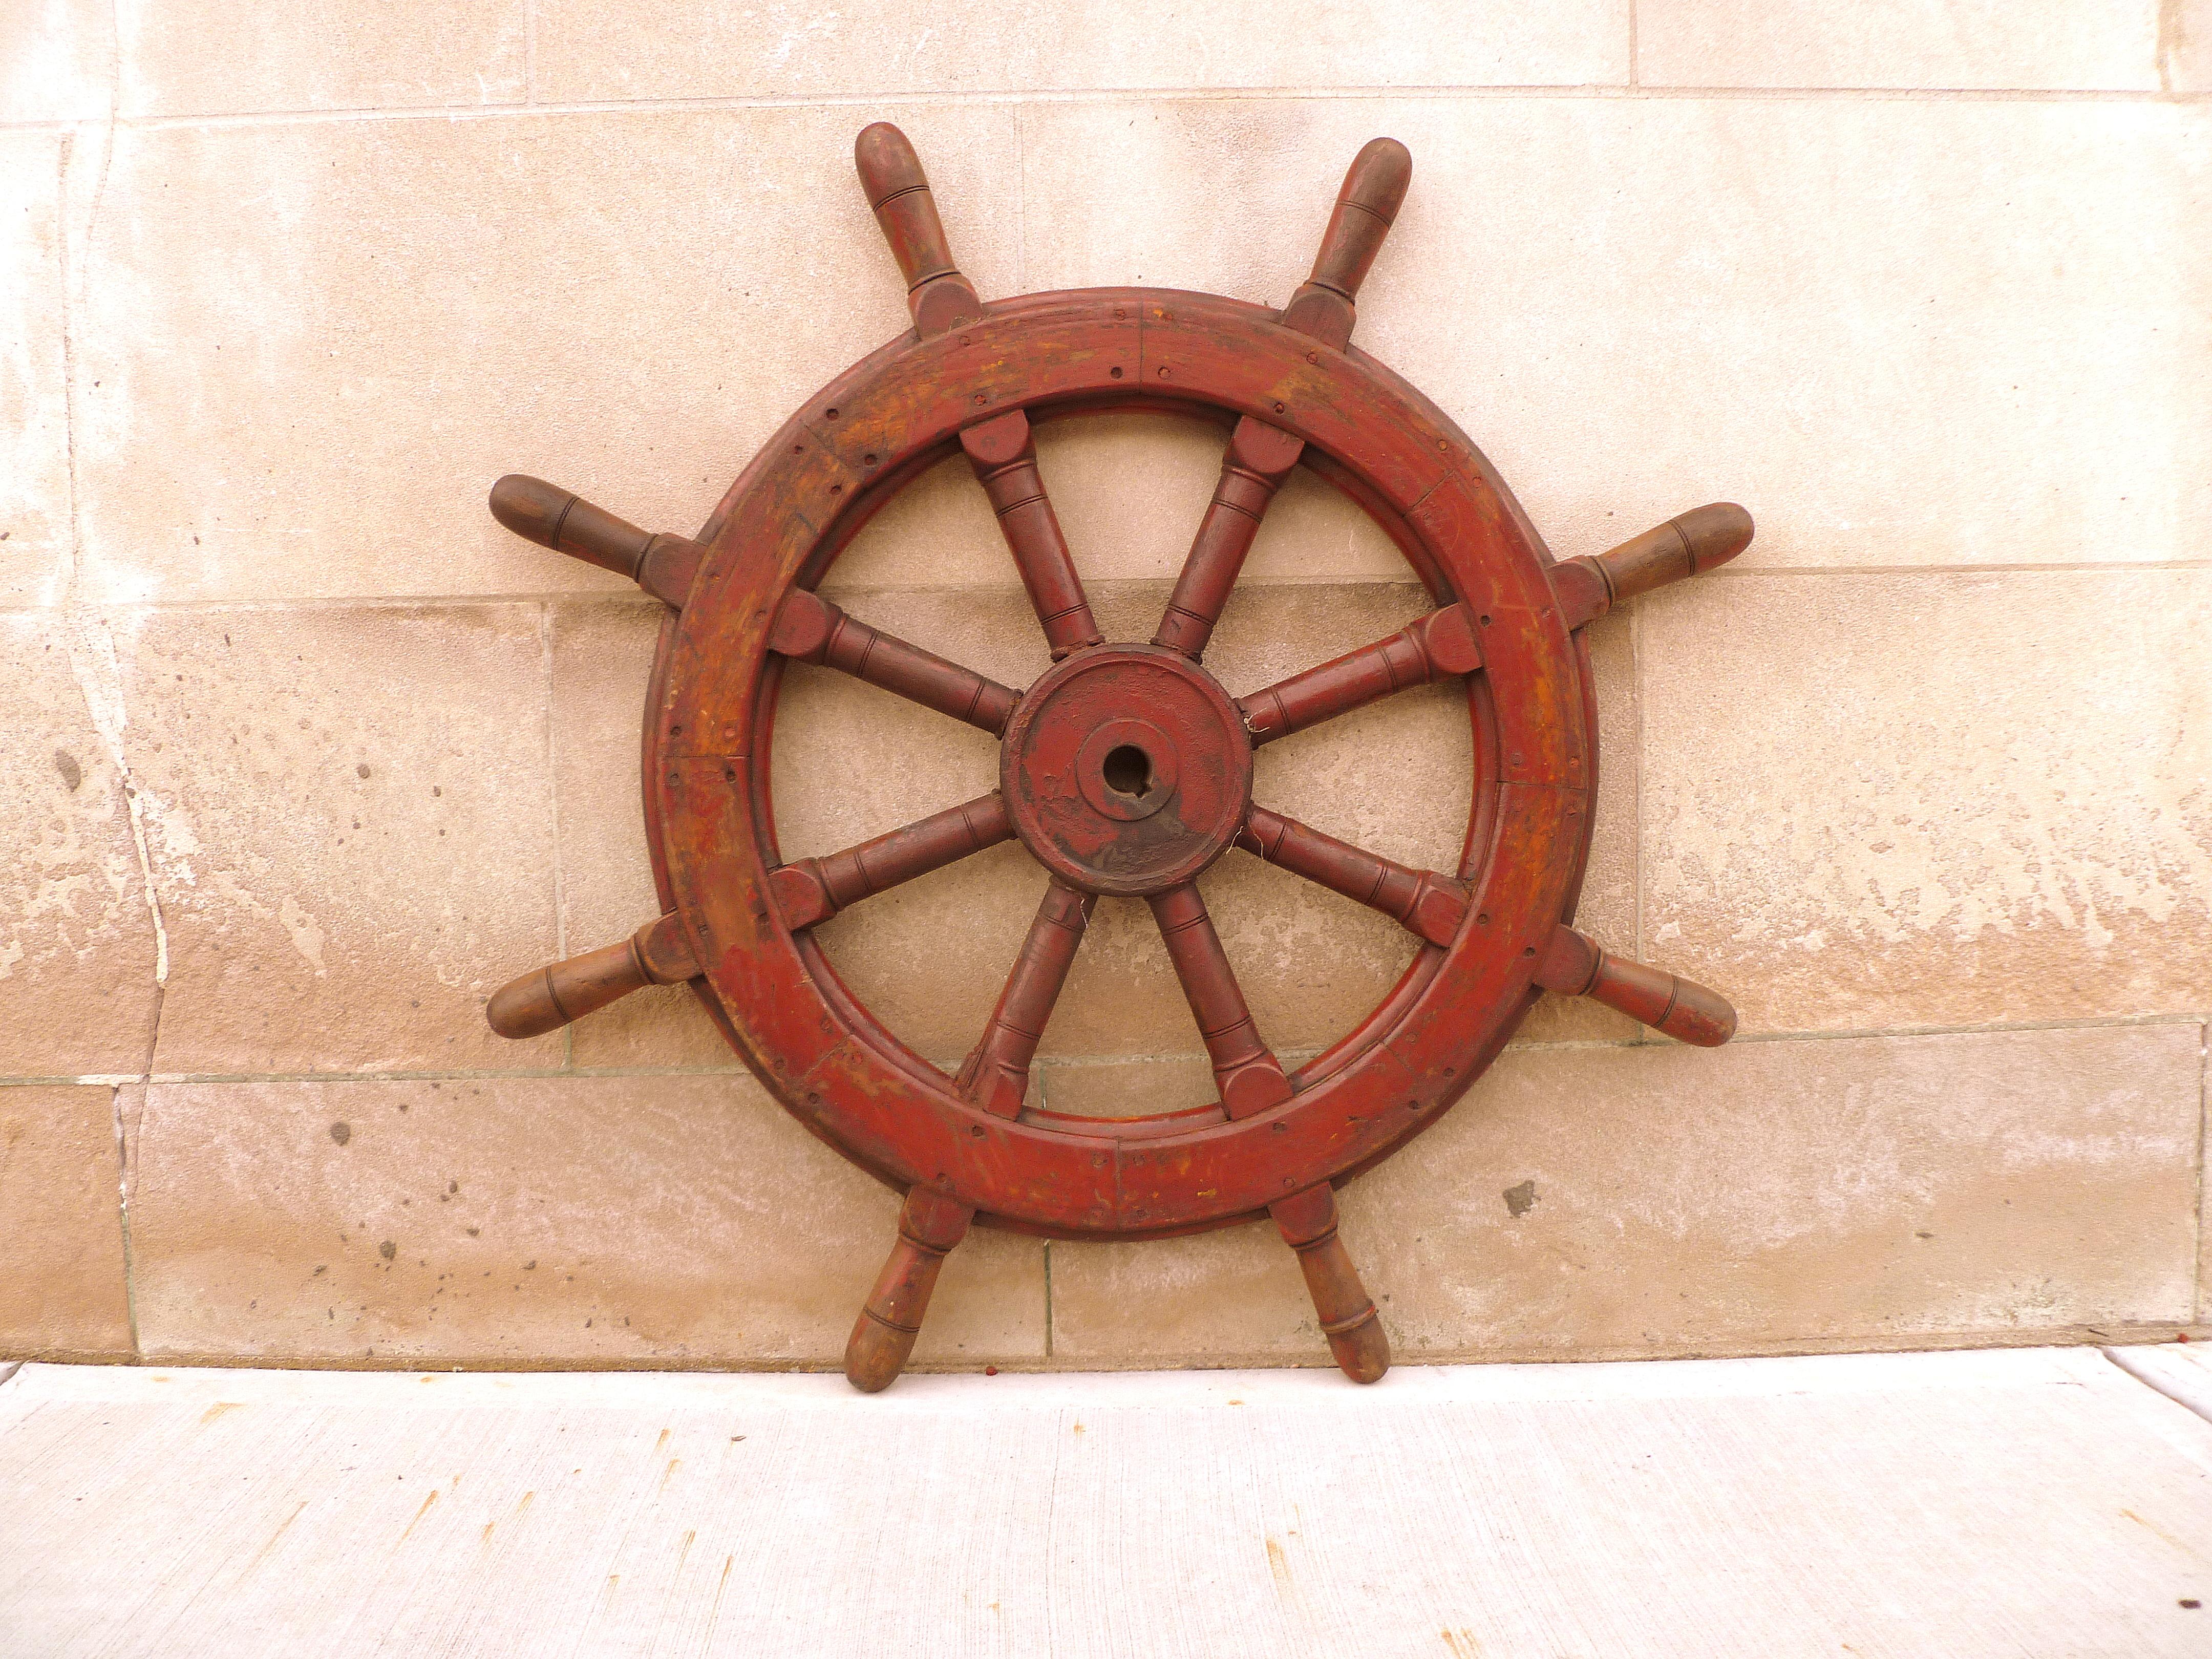 Antique vessel handle wheel.